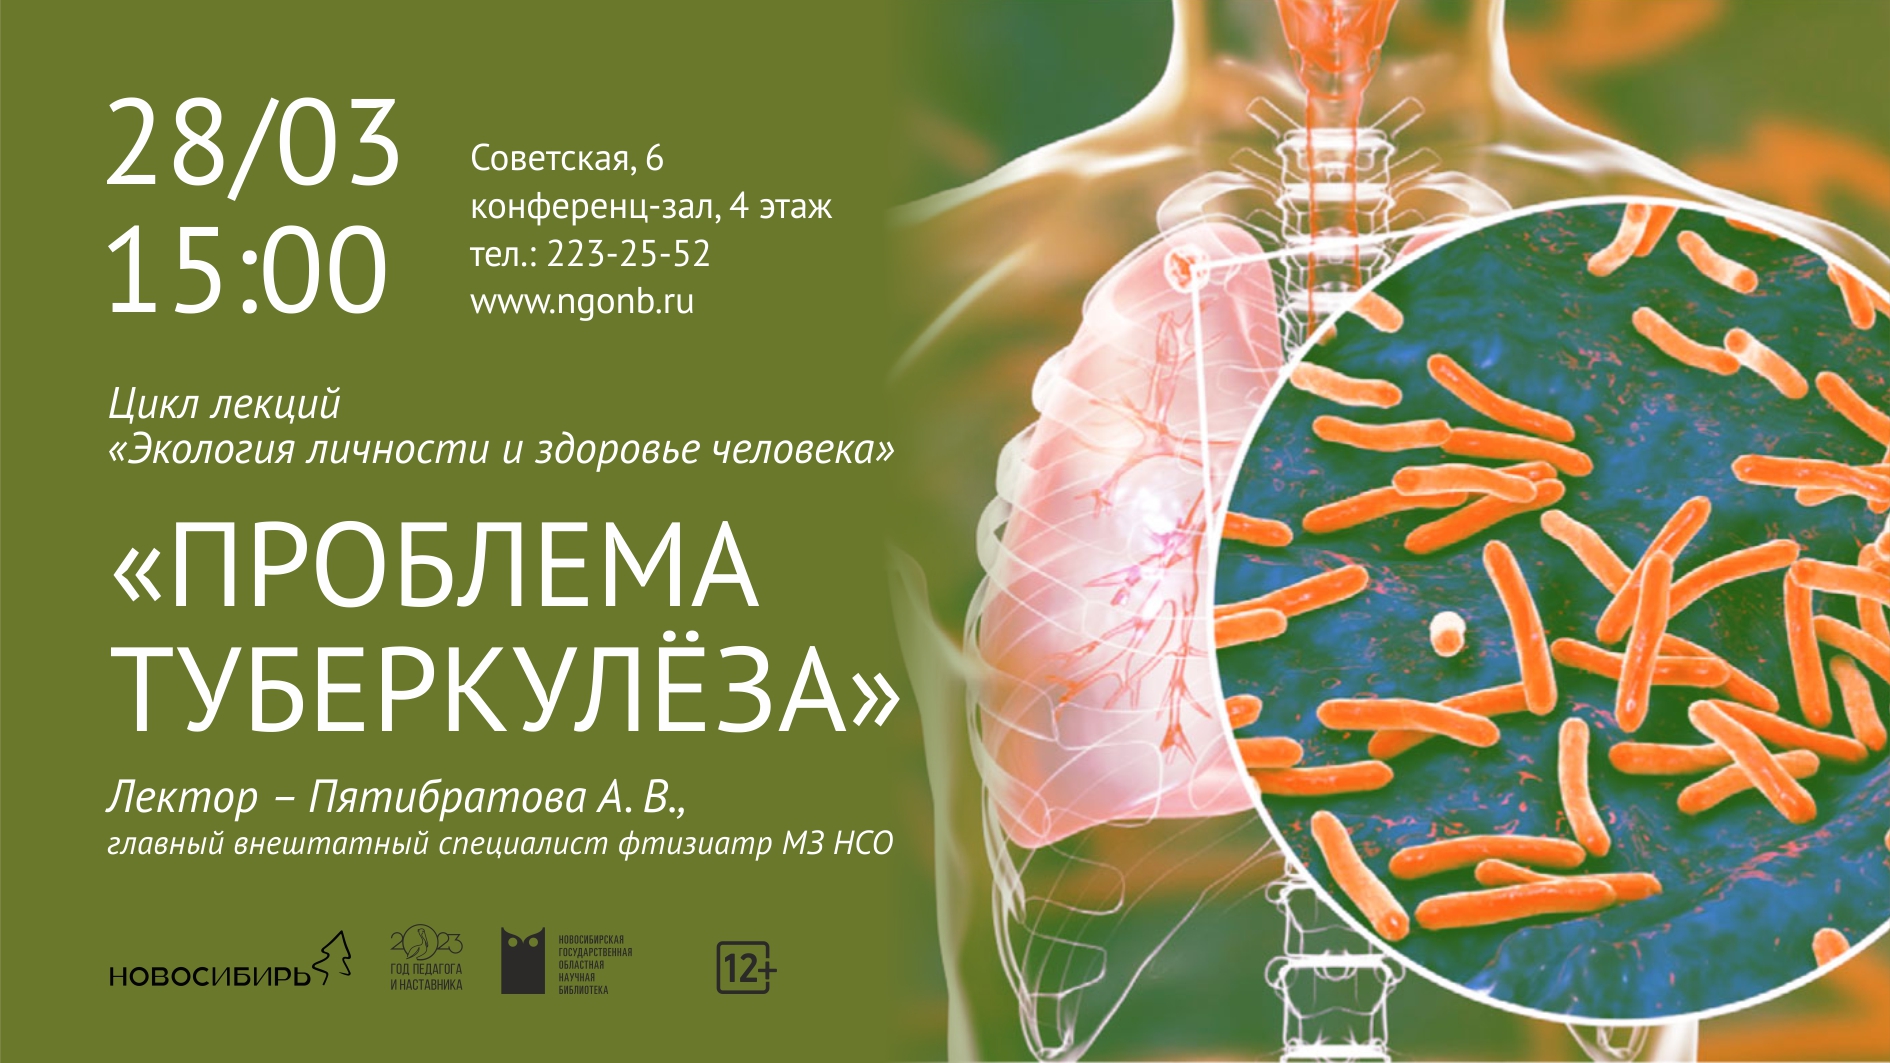 Лекция «Проблема туберкулёза» и "Курение как фактор риска развития туберкулёза".